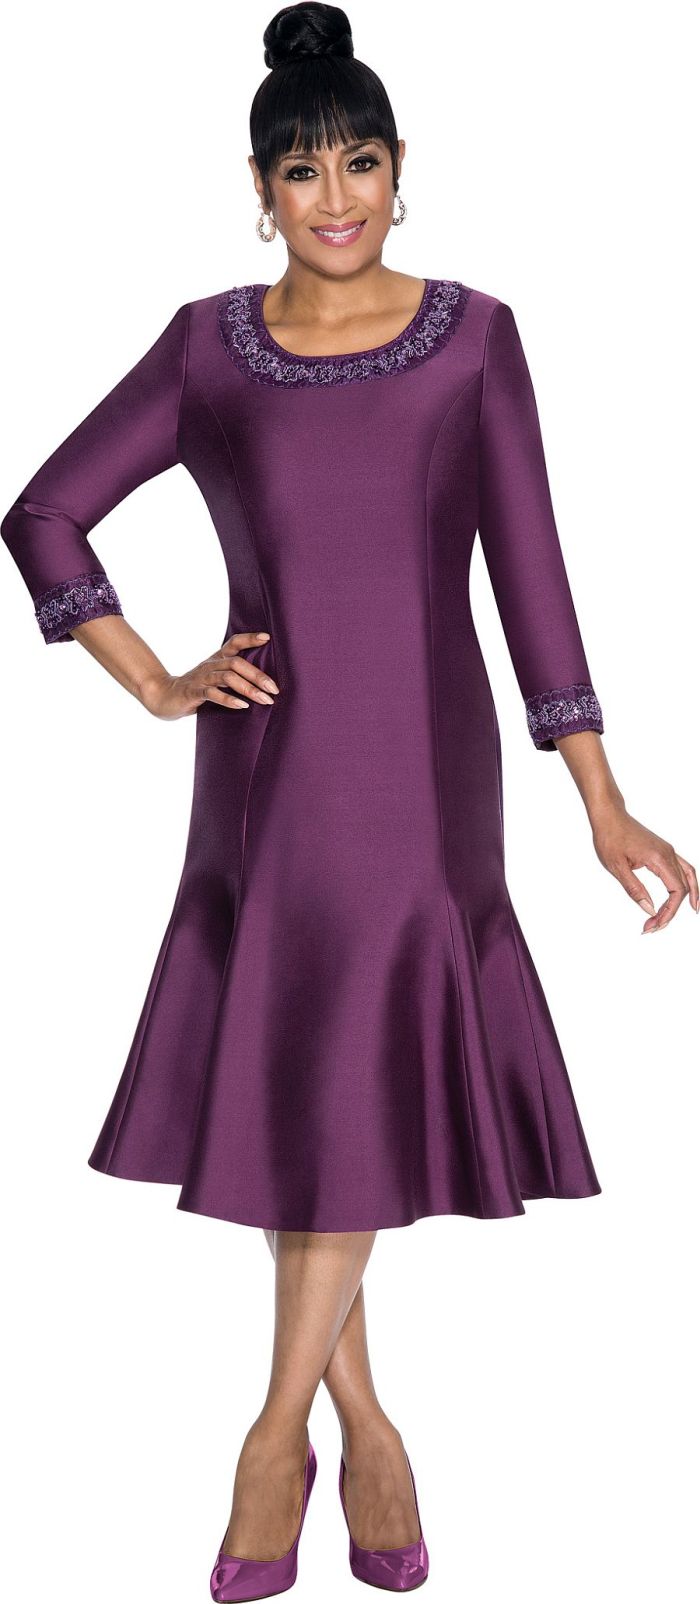 Dorinda Clark Cole DCC231 Long Sleeve Church Dress - French Novelty